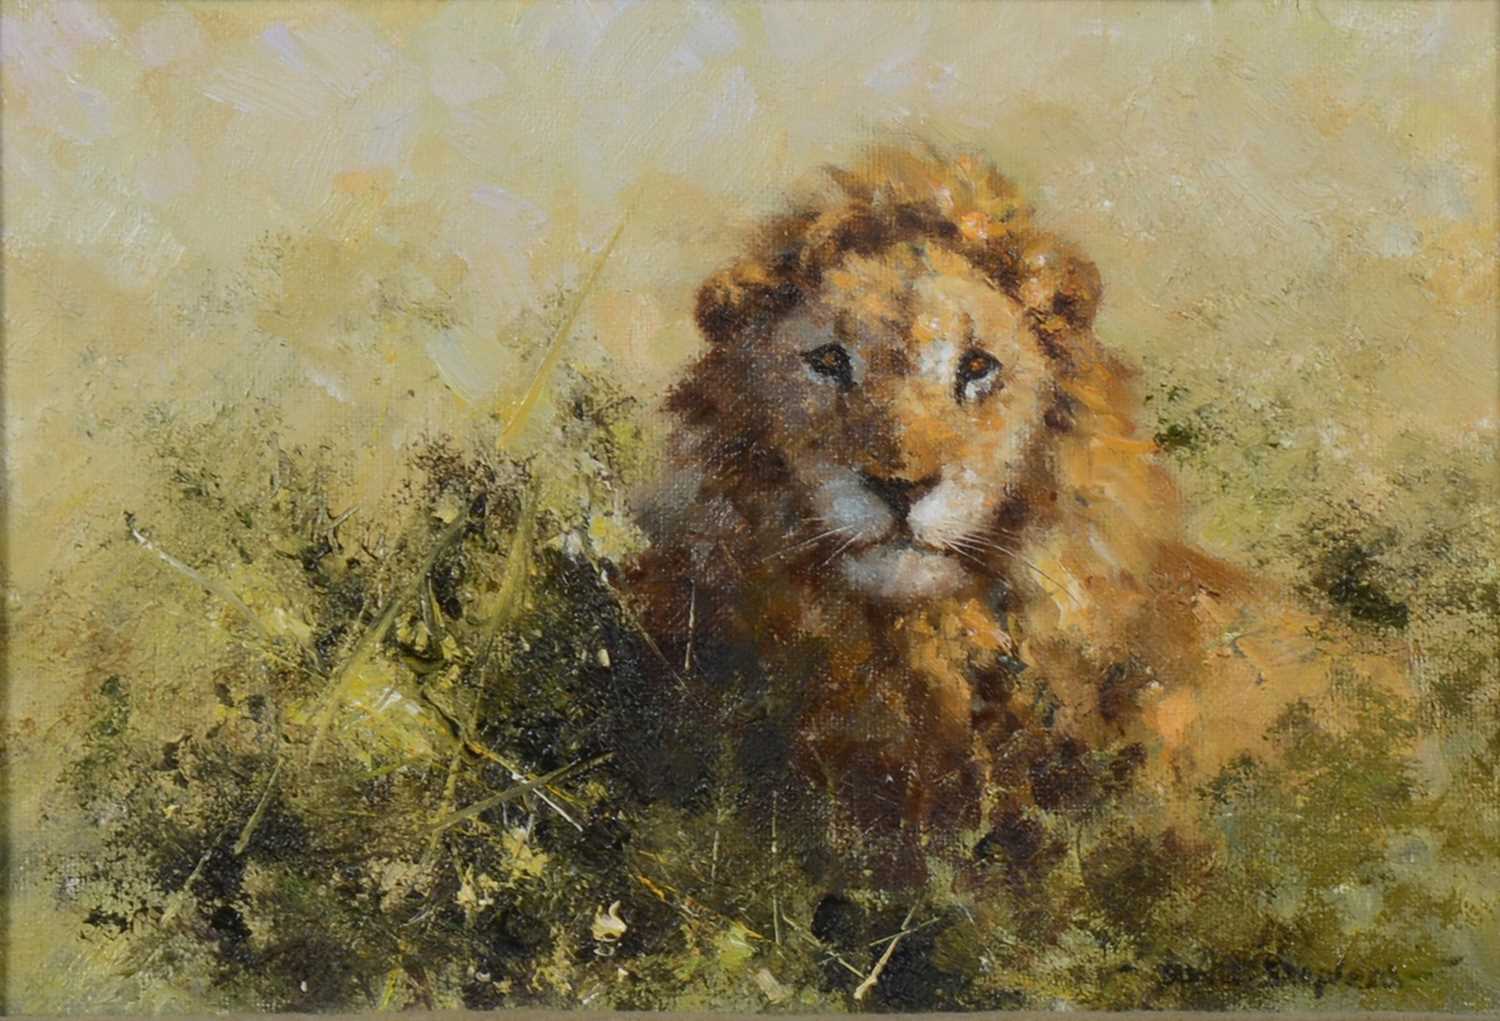 148 - David Shepherd, Lion